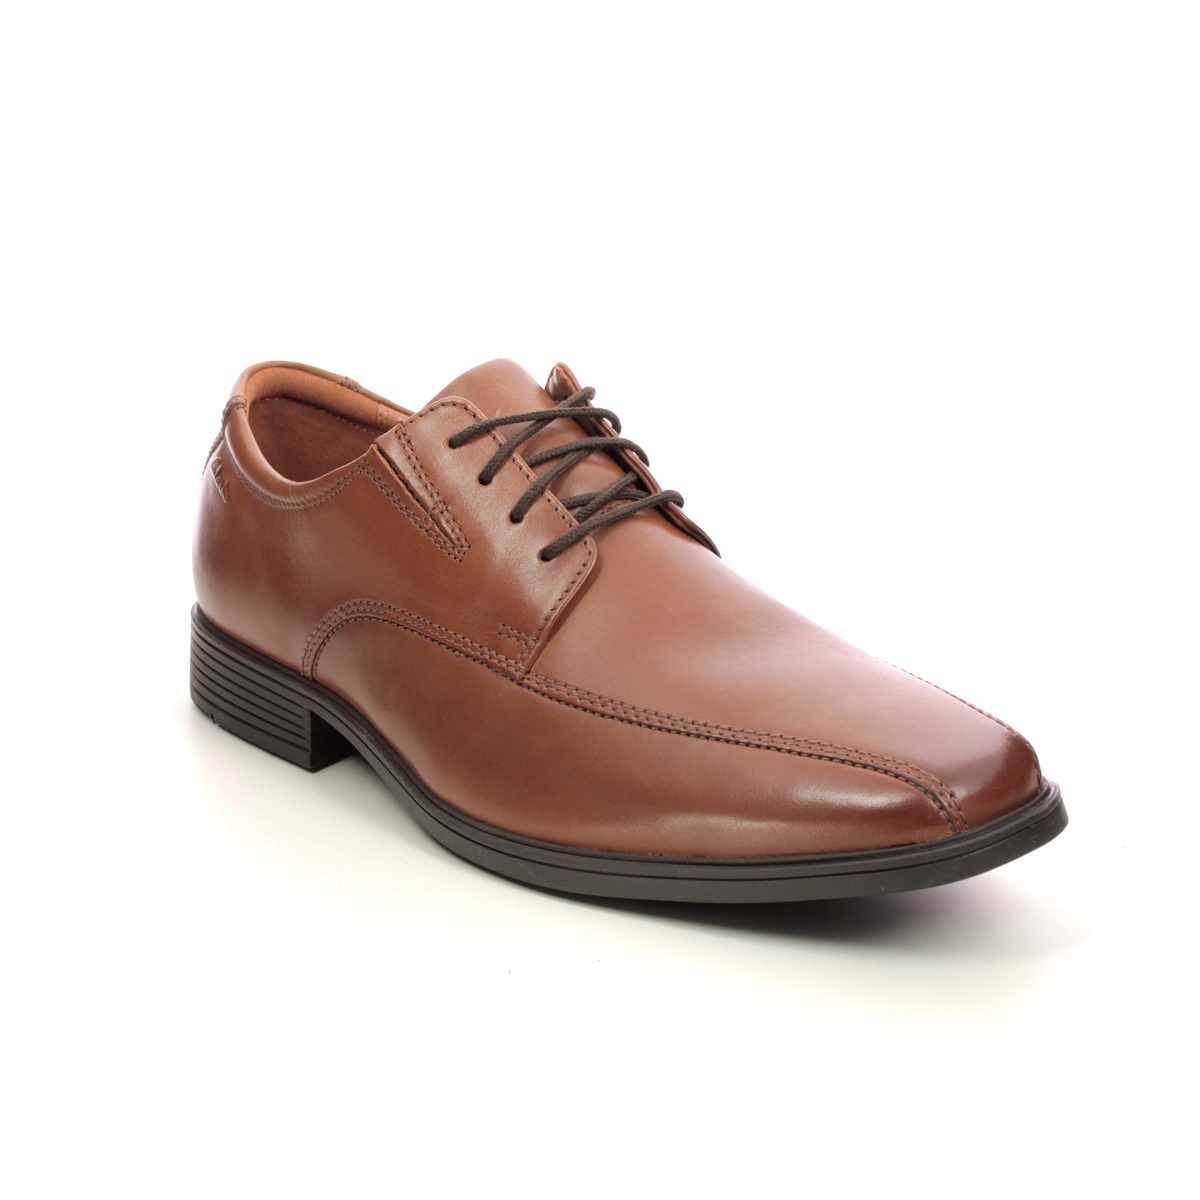 Clarks Tilden Walk Dark Tan Mens Formal Shoes 300958H In Size 8.5 In Plain Dark Tan H Width Fitting Extra Wide